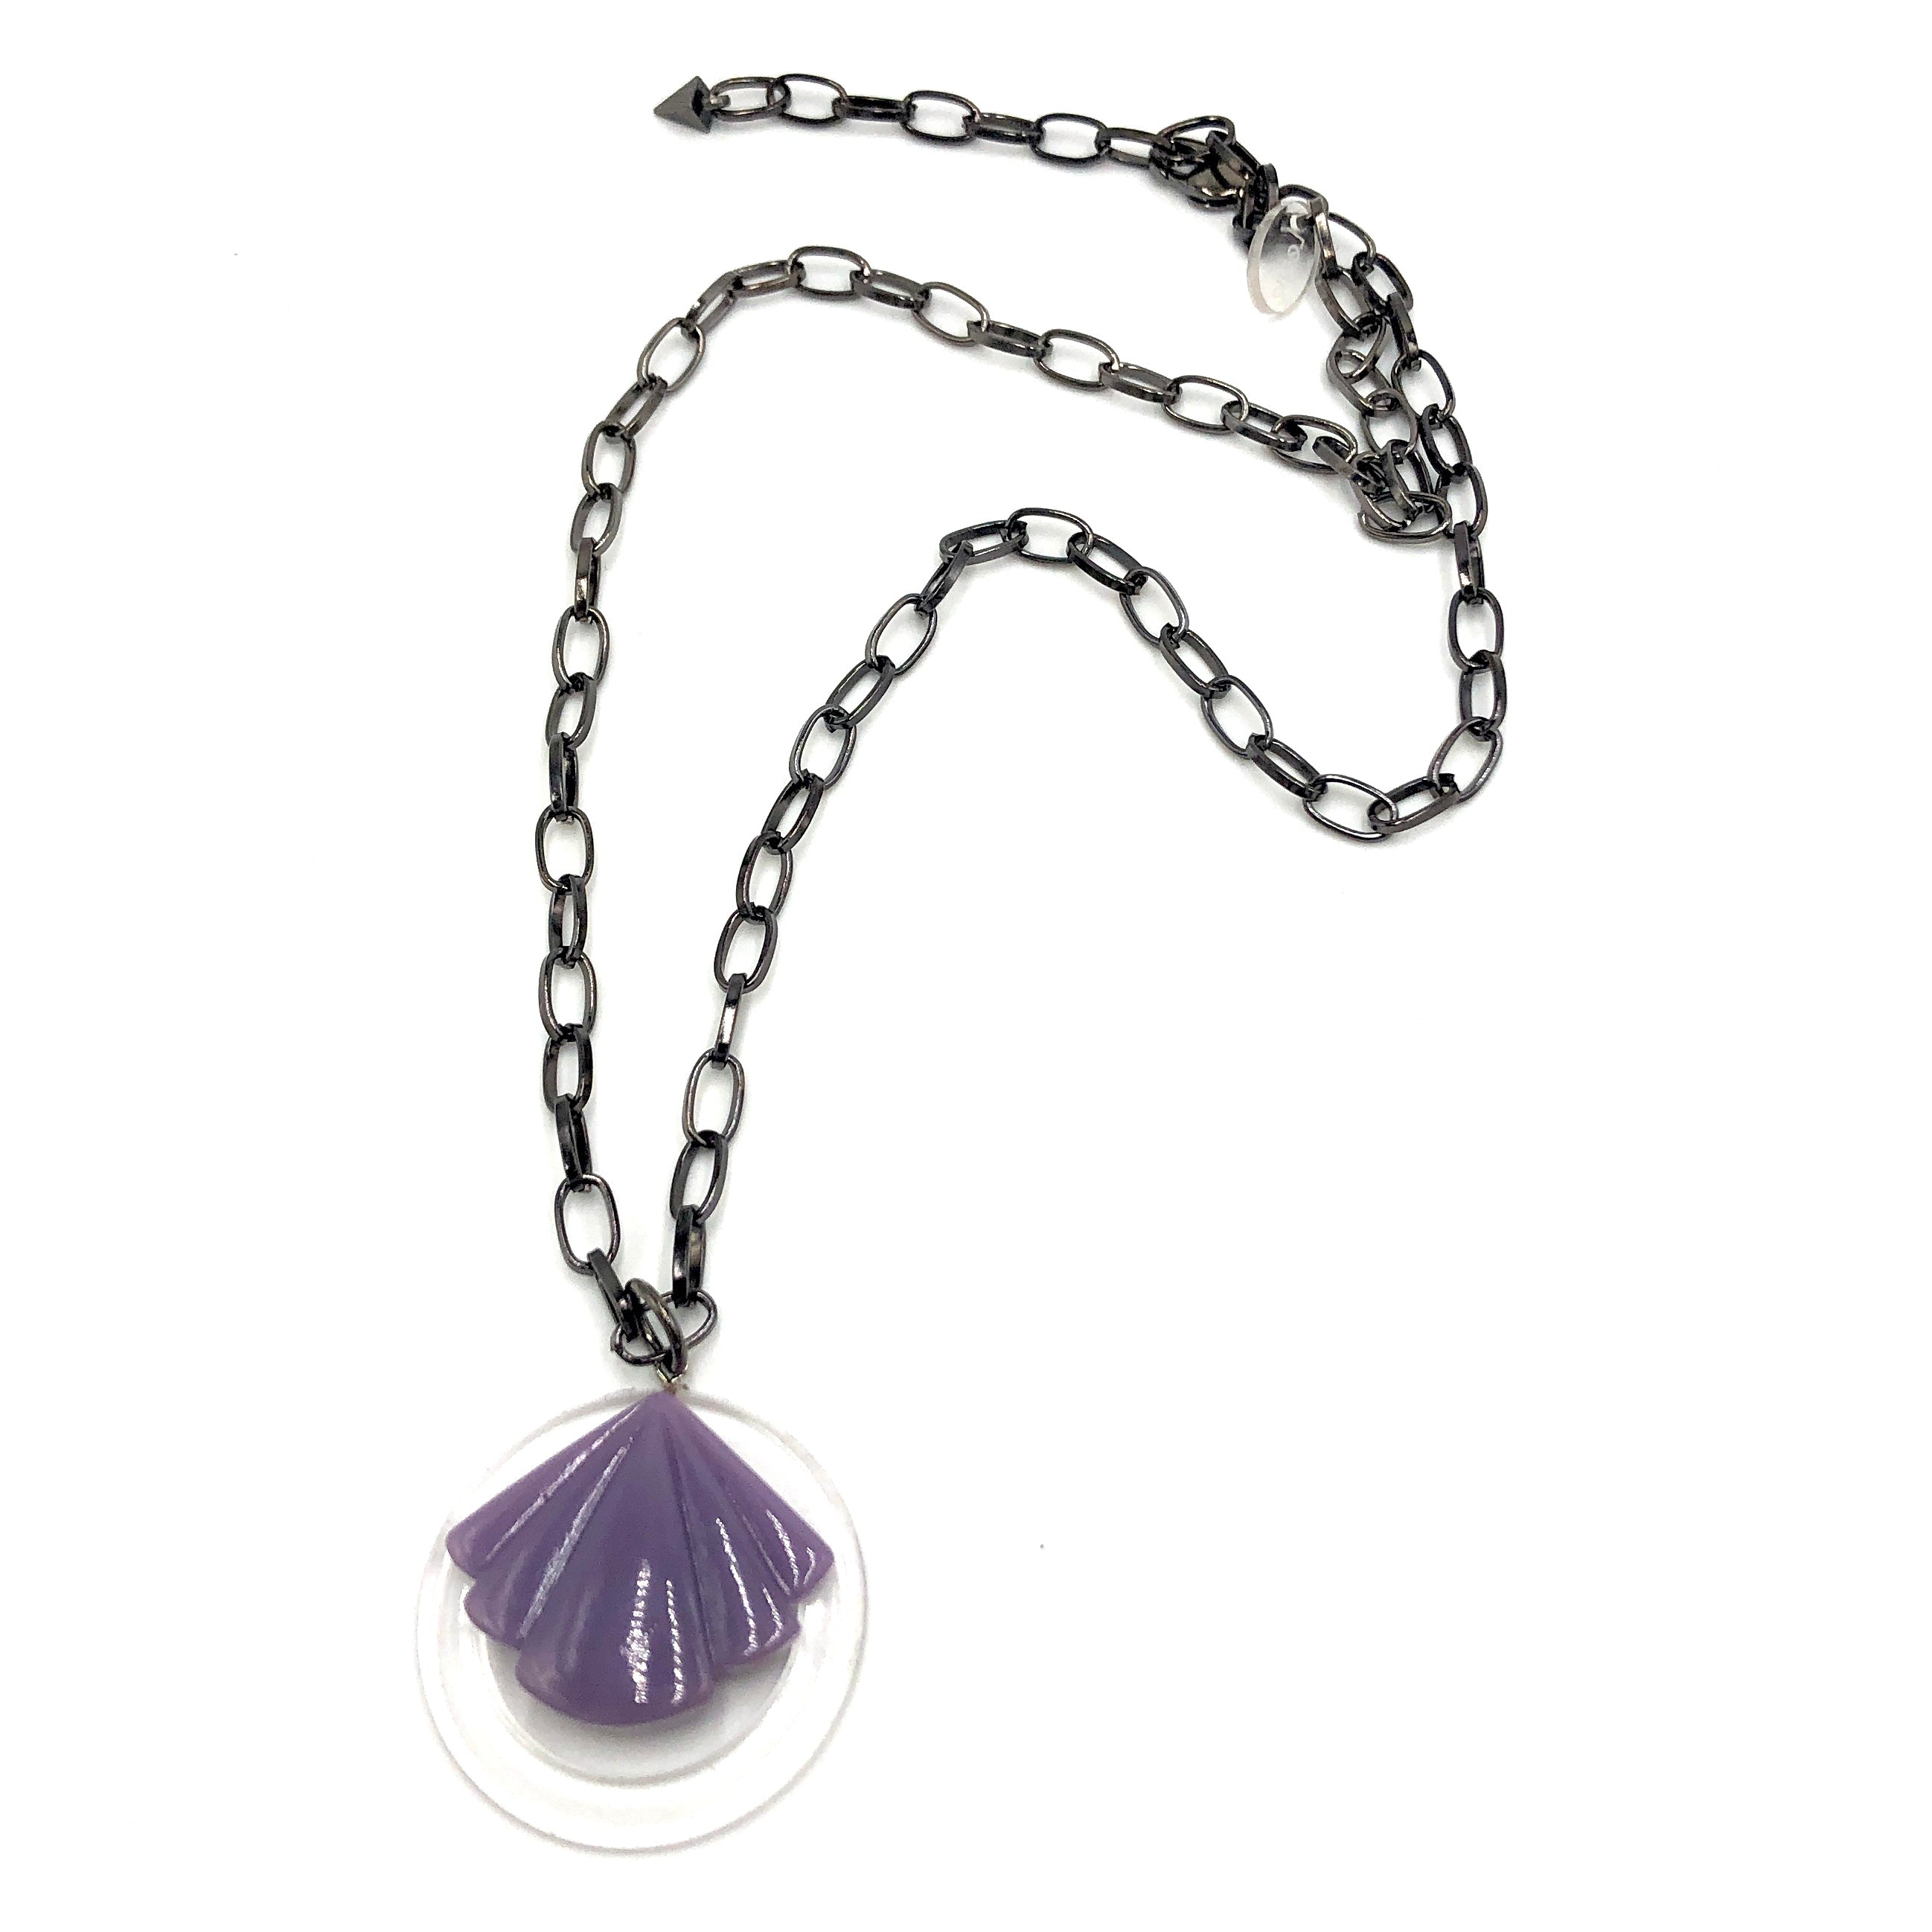 carved pendant necklace purple